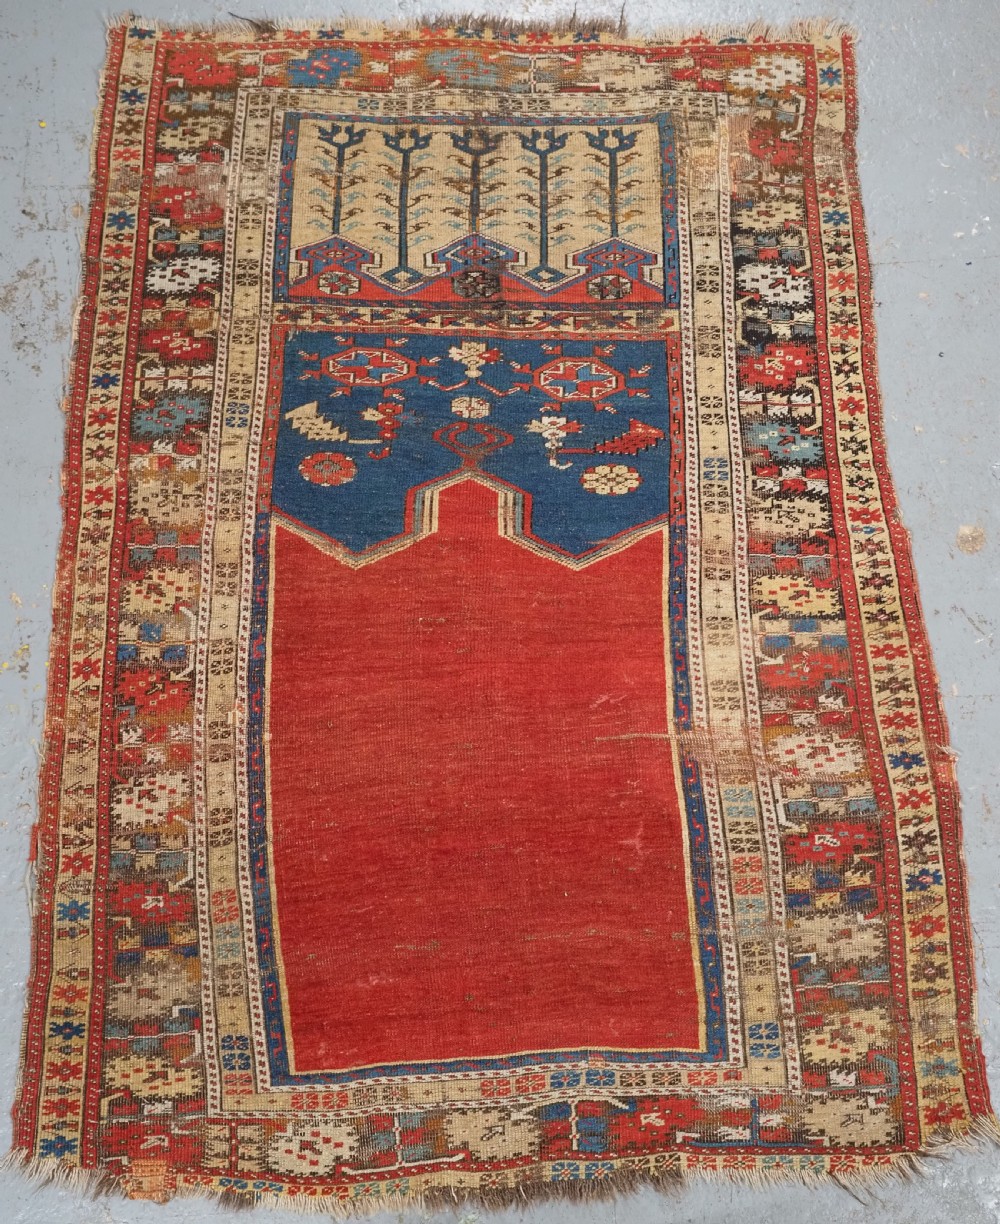 antique turkish ottoman ladik prayer rug superb display item circa 1800